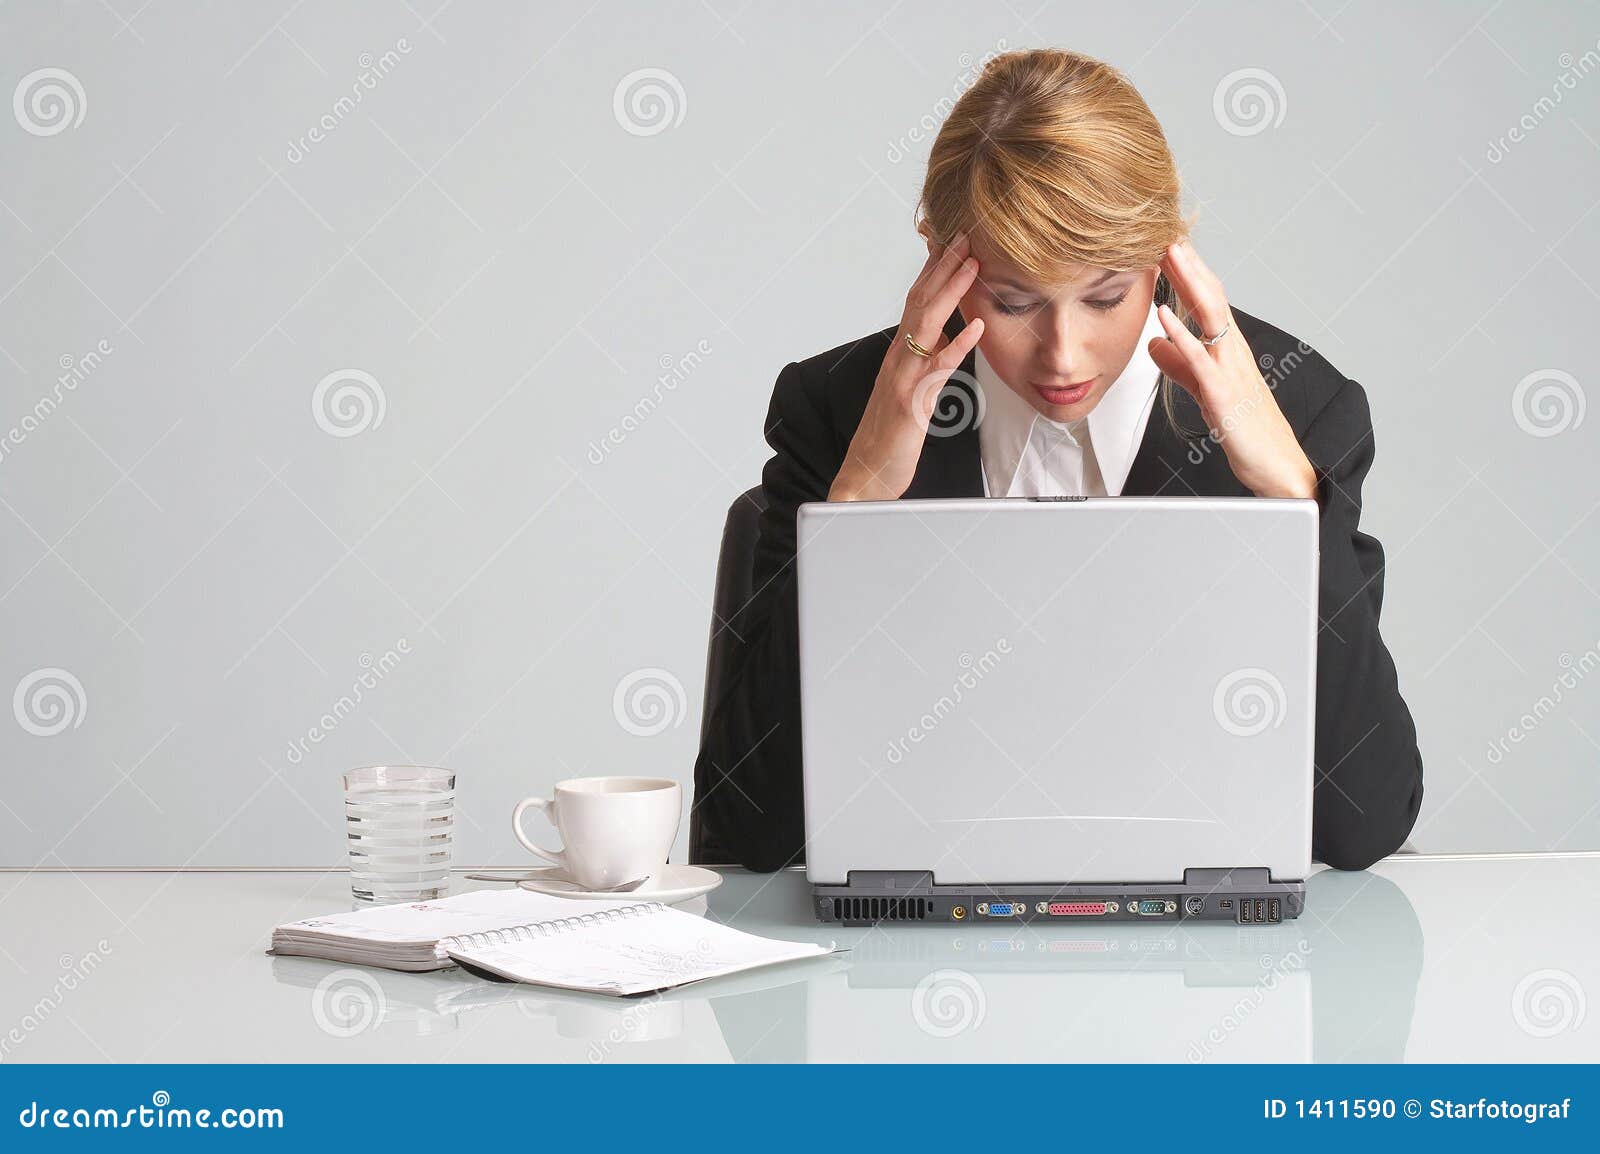 stressed businesswoman with laptop has headache